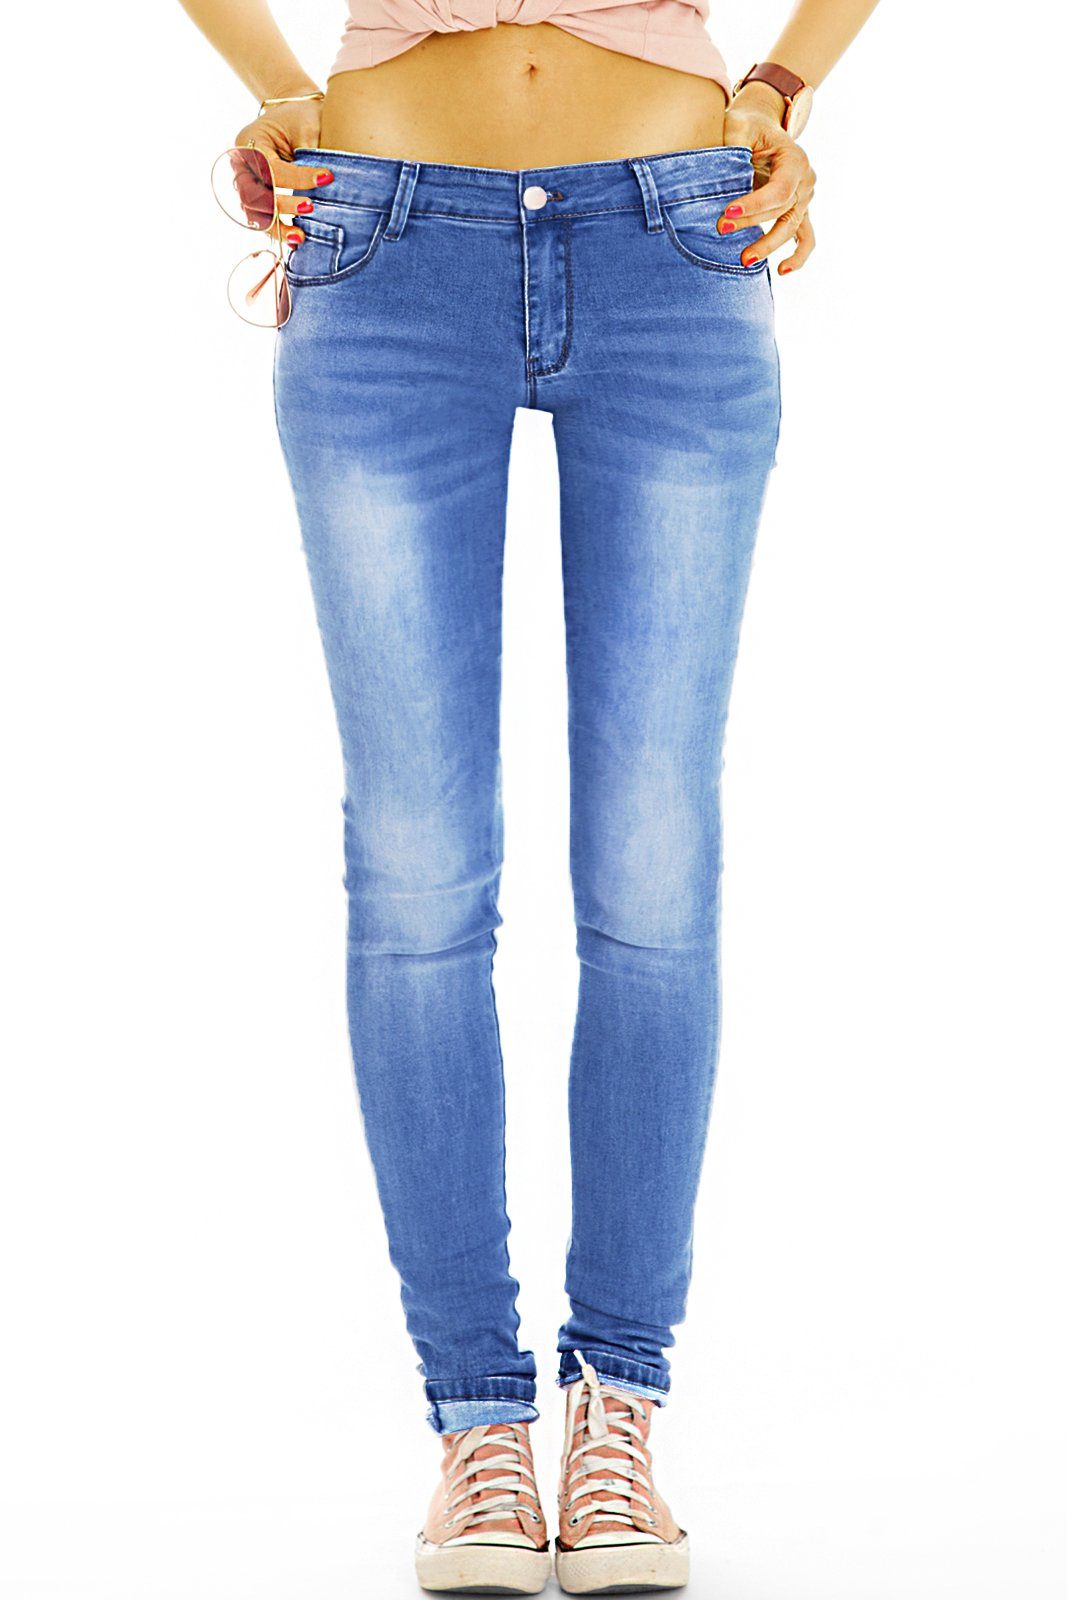 - j36p niedrige dunkelblau Low-rise-Jeans 5-Pocket-Style Rise - Leibhöhe Hose mit Low Stretch-Anteil, Jeans styled Hüftjeans be Damen